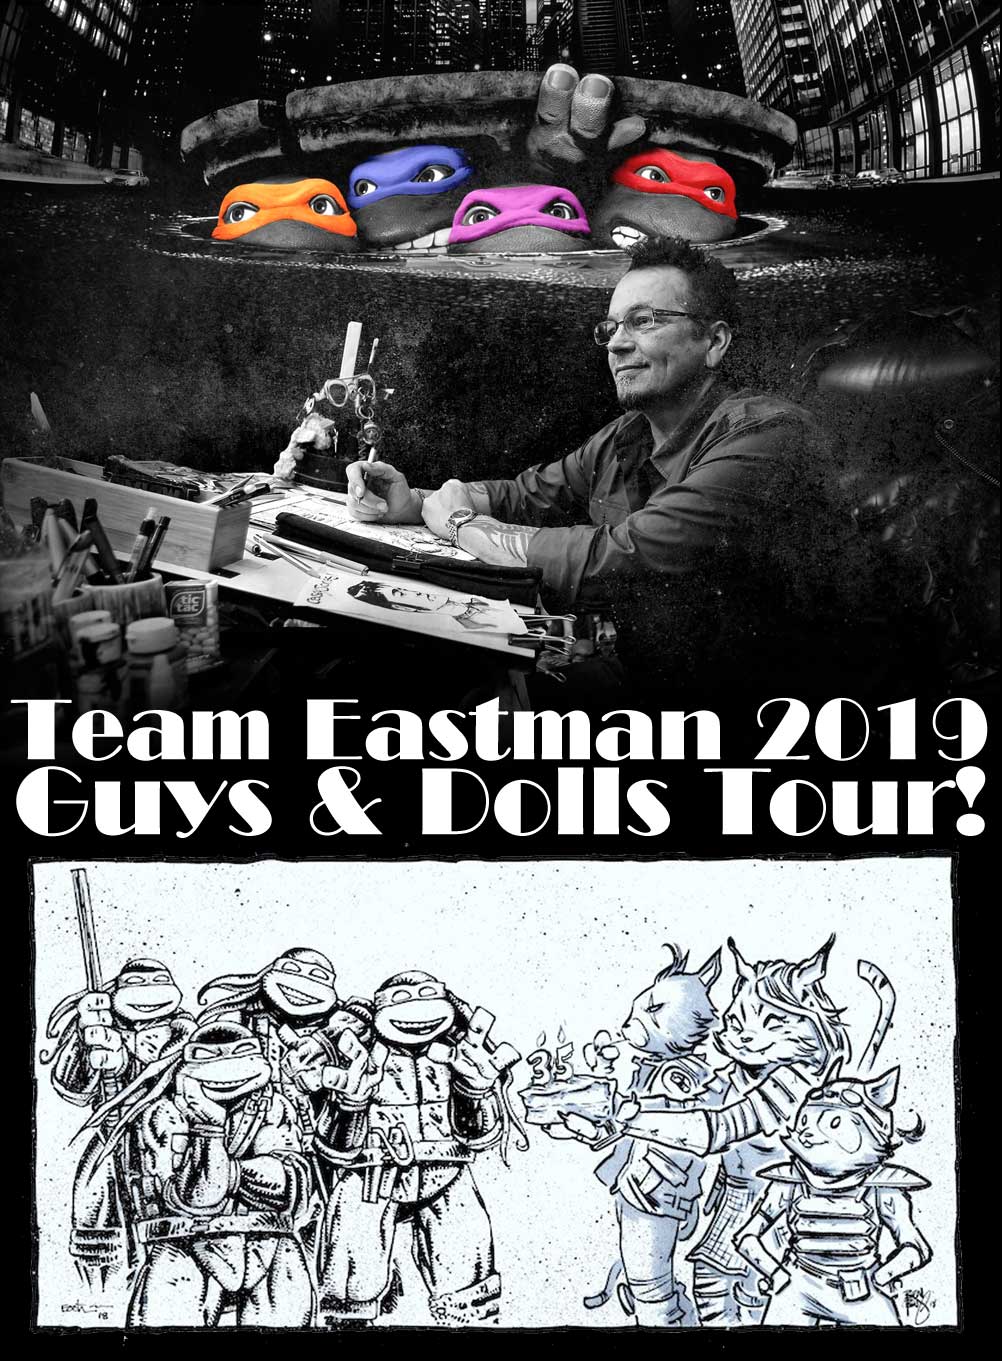 Team Eastman 2019 Tour Schedule